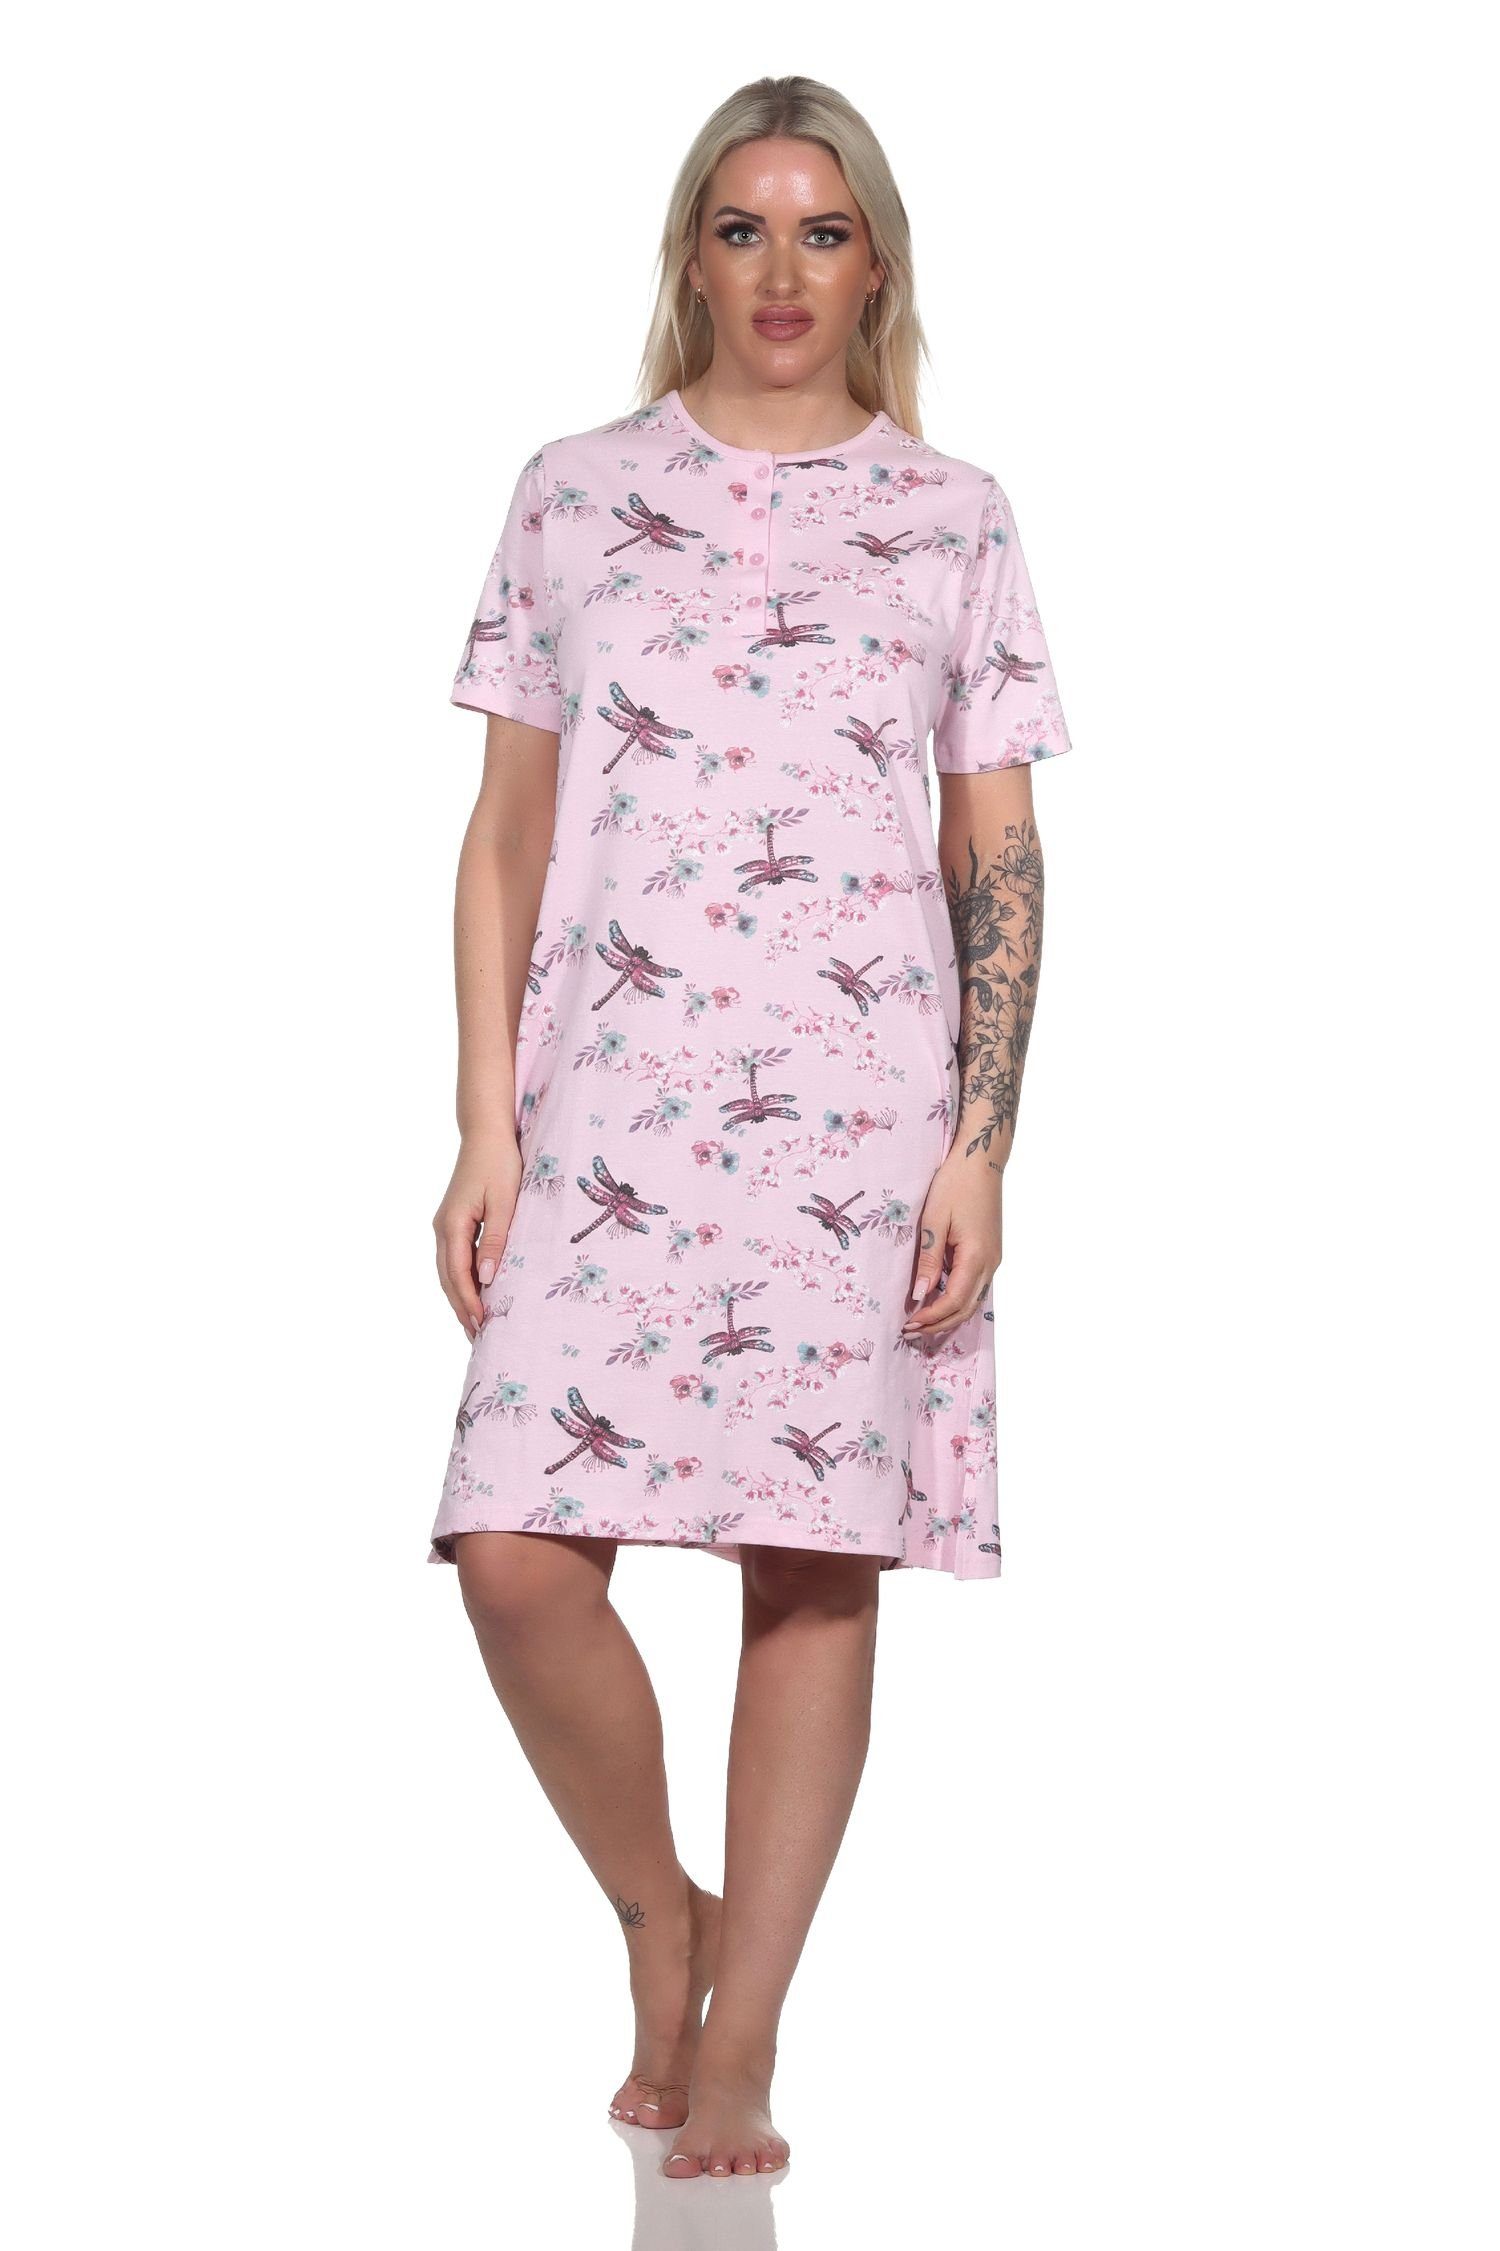 Normann Nachthemd Damen kurzarm Nachthemd floraler Alloverprint und Knopfleiste am Hals rosa | Nachthemden